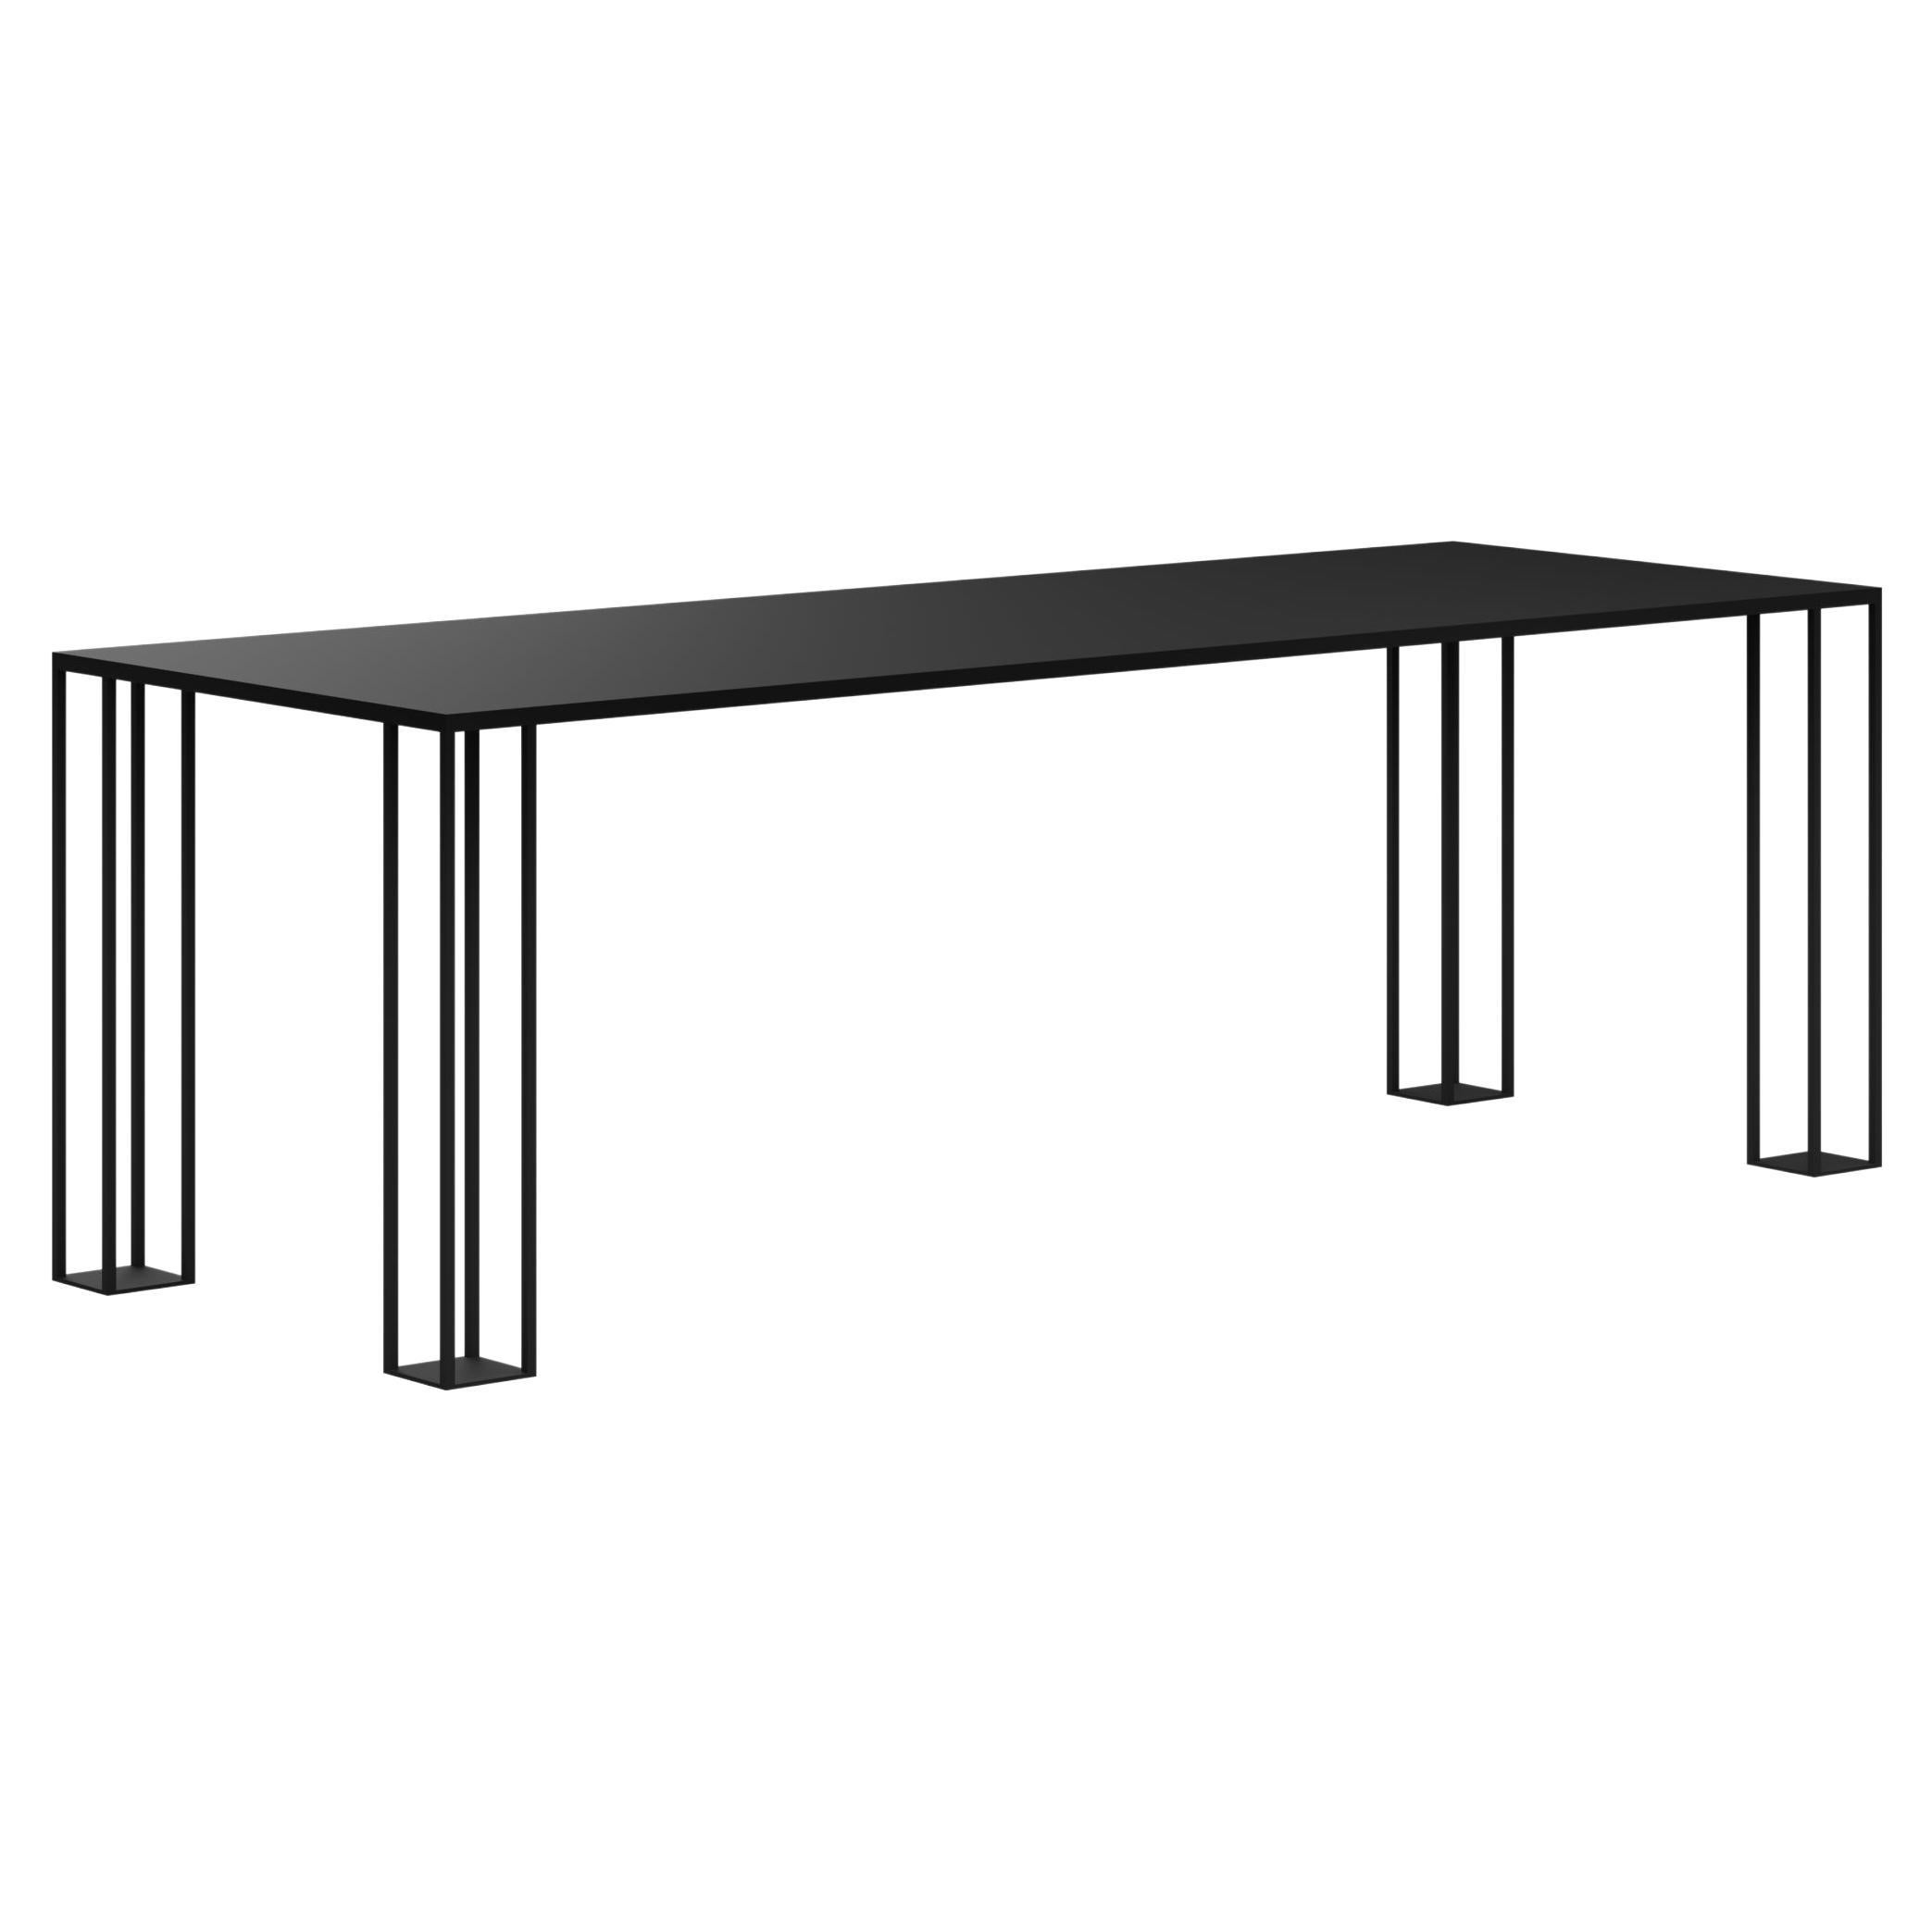 XYZ Steel Table black